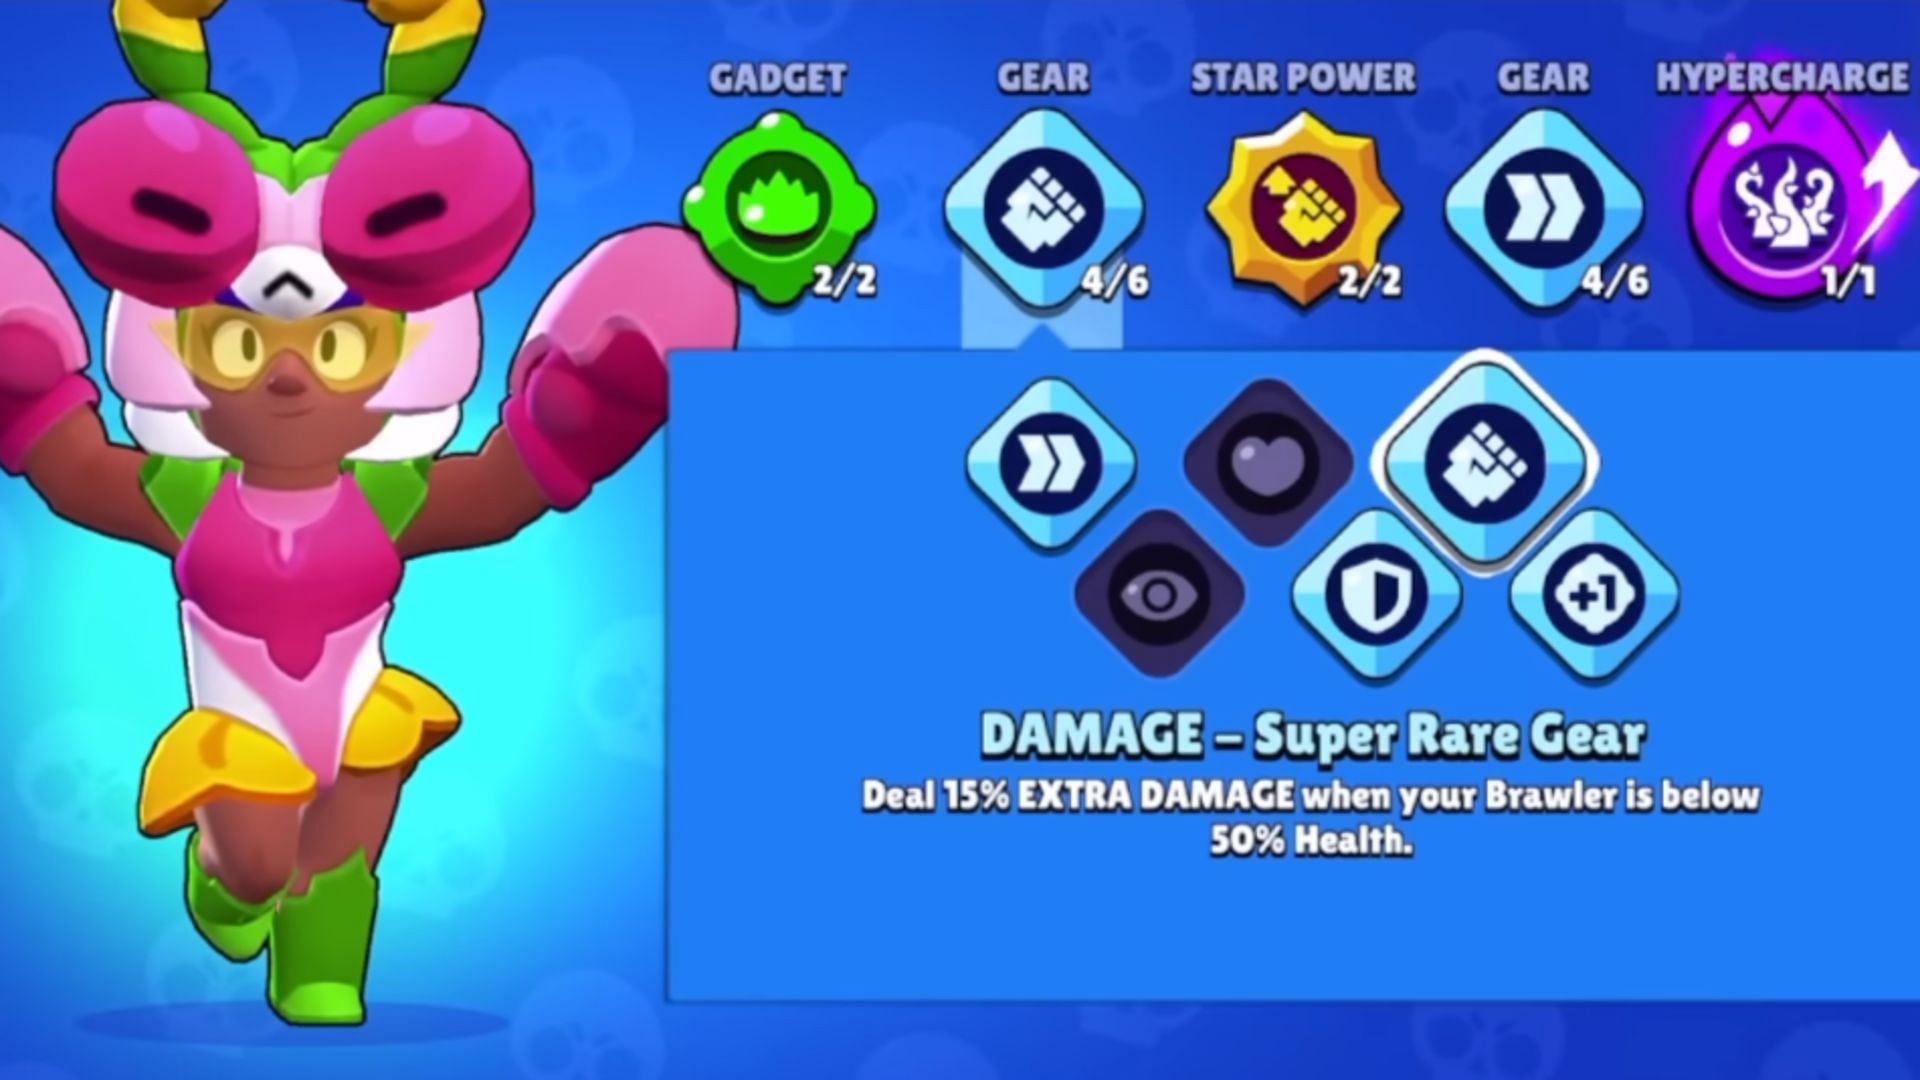 Damage - Super Rare Gear (Image via Supercell)